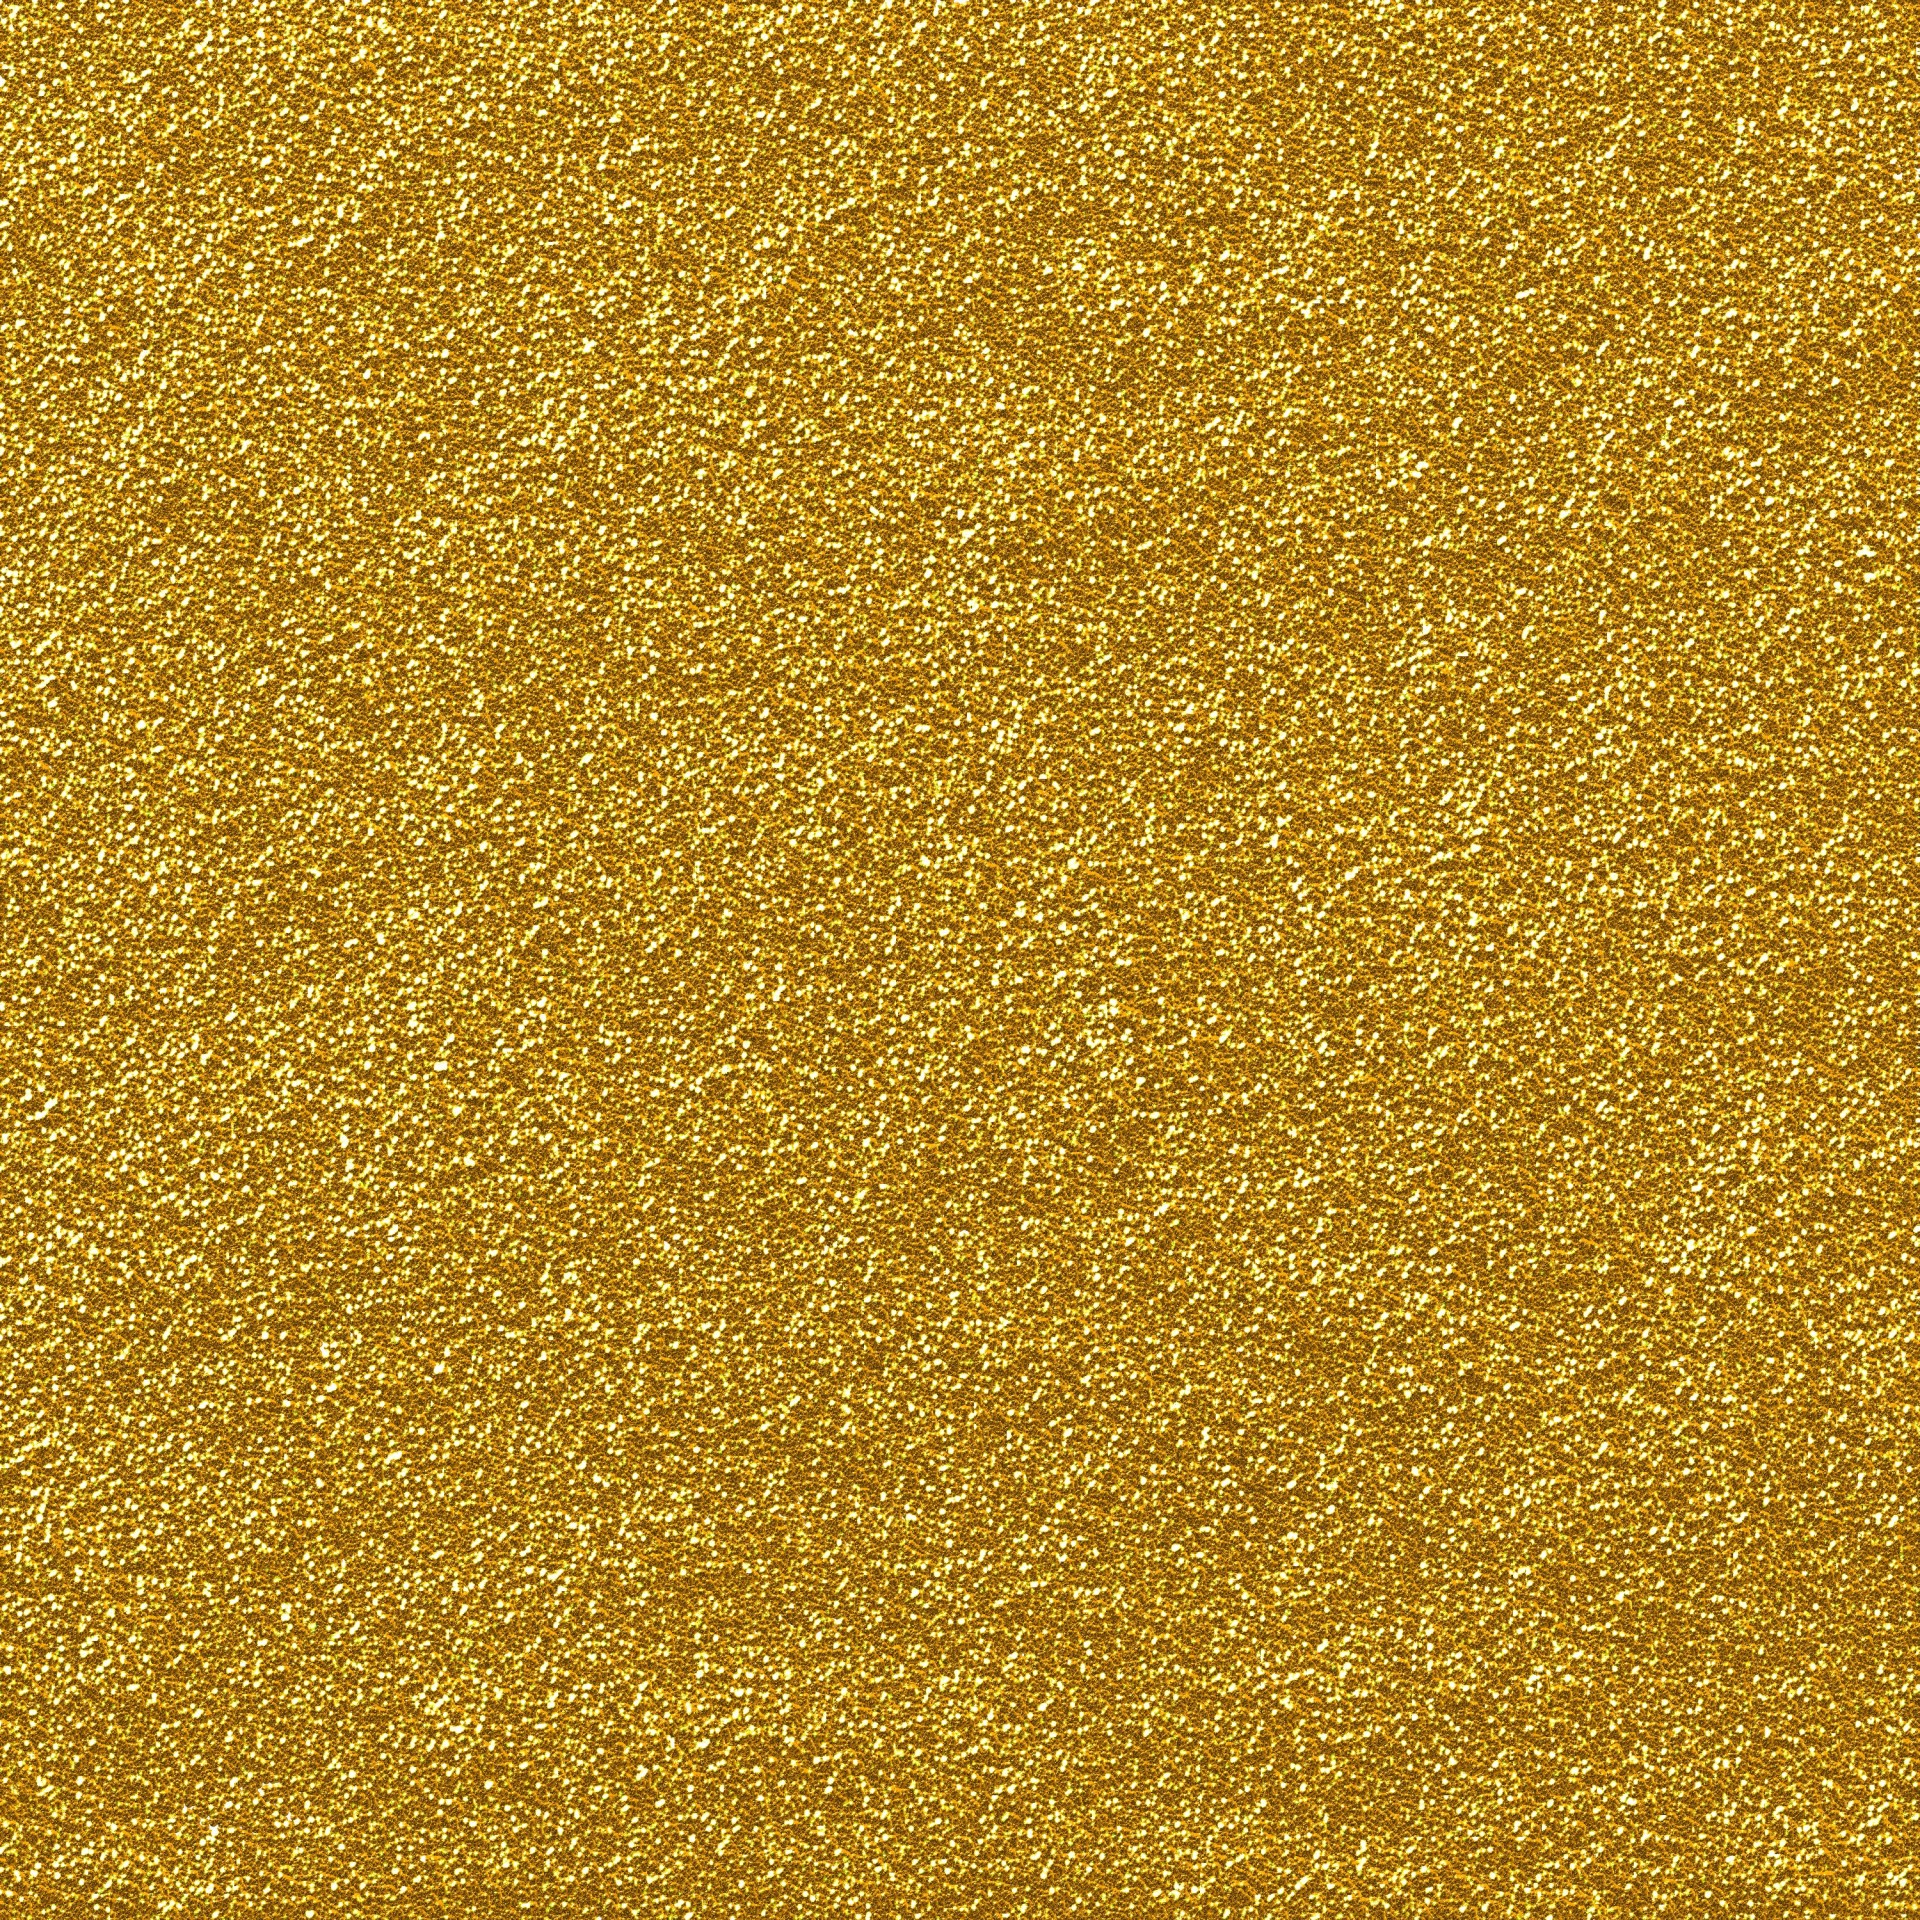 Metallic Gold Glitter Texture Free Stock Photo - Public Domain Pictures